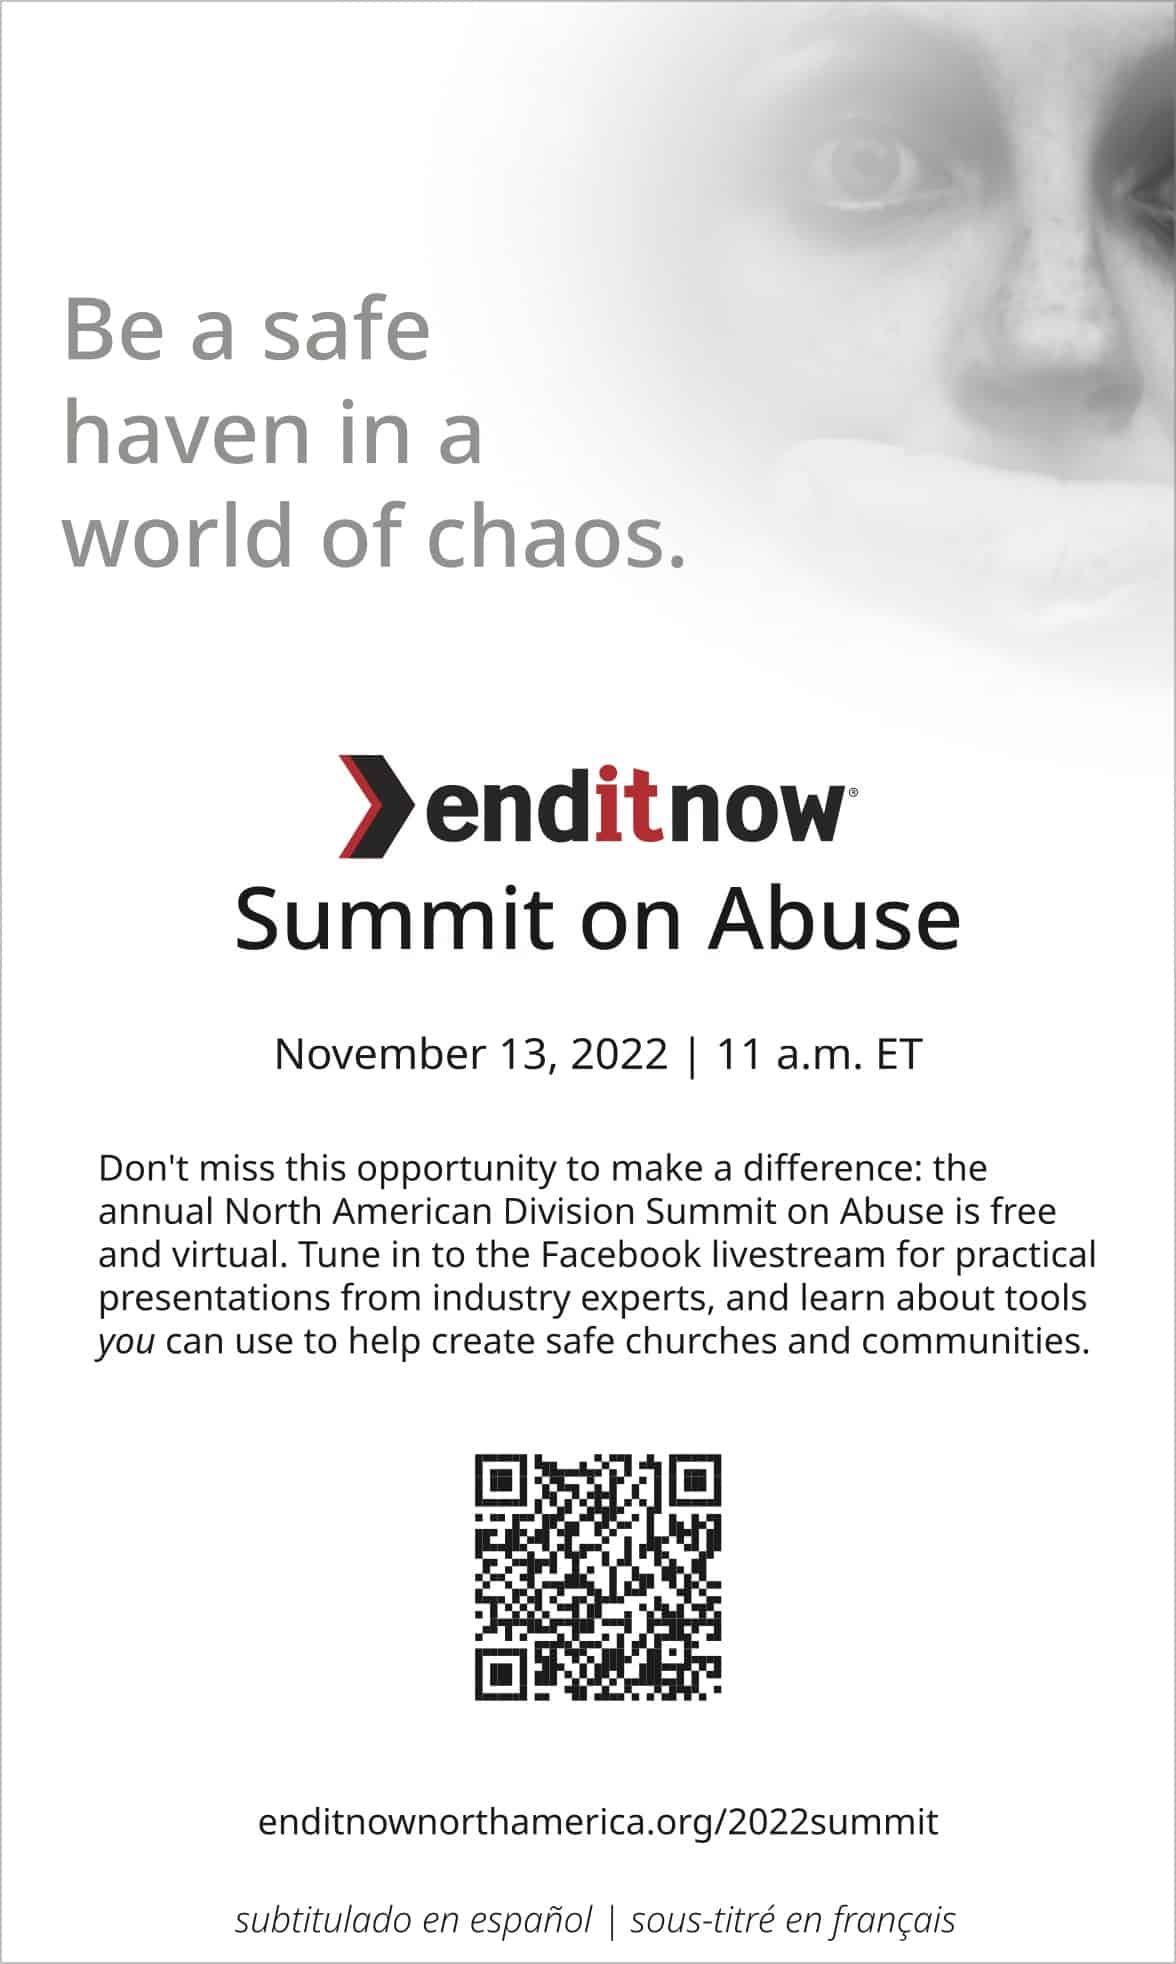 EndItNow Summit